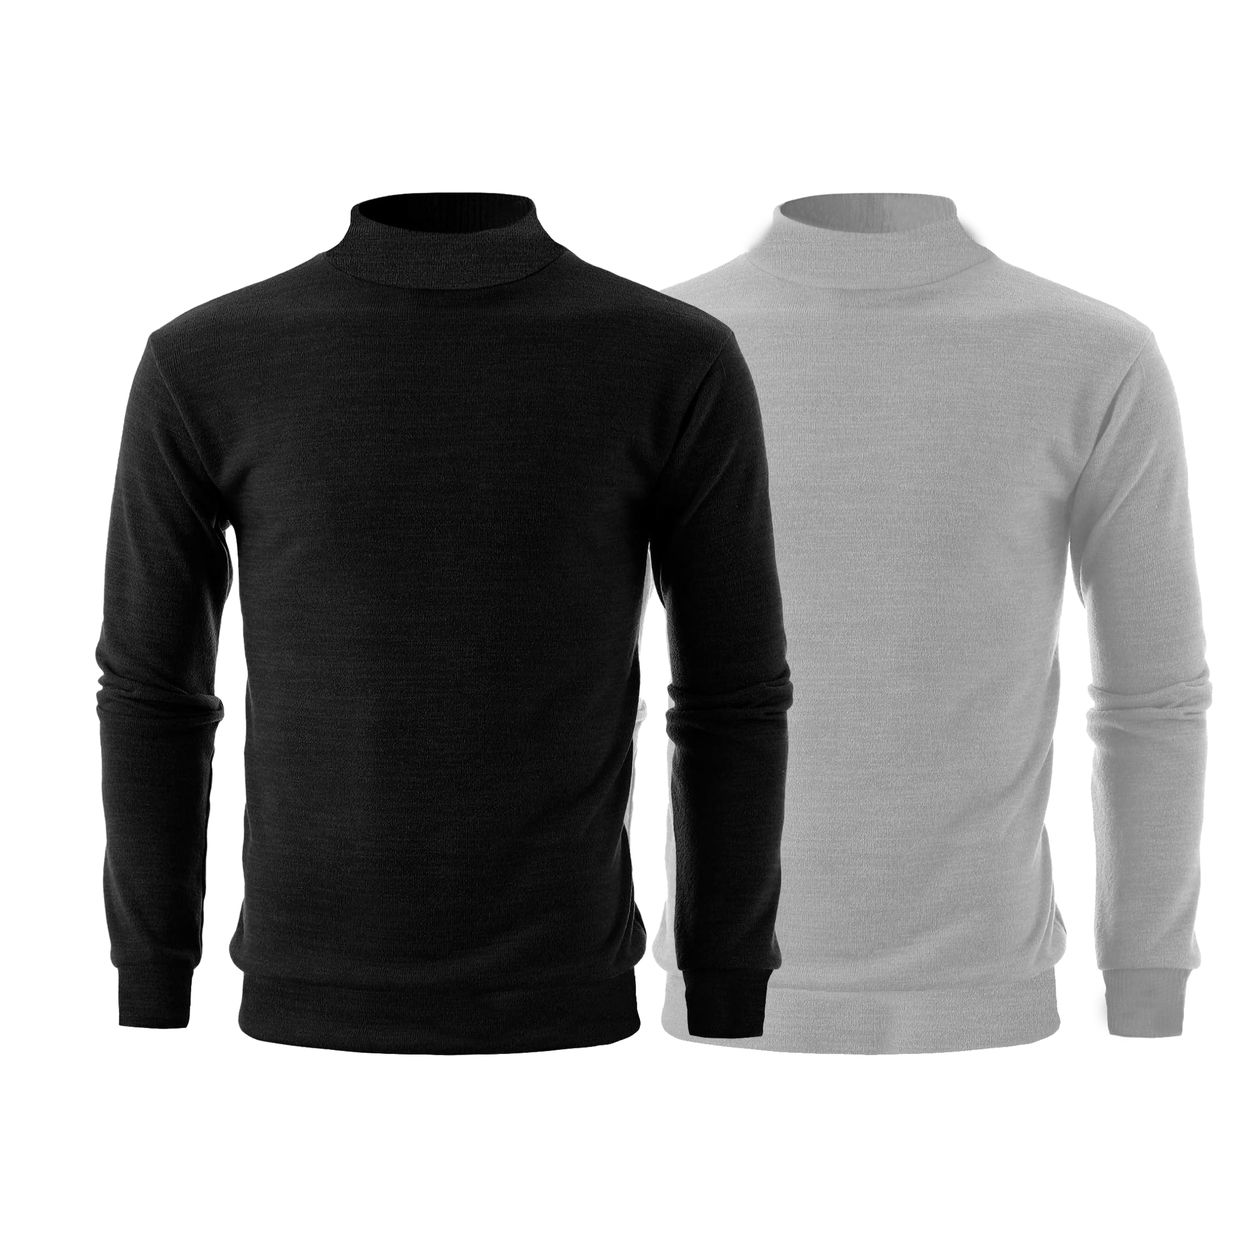 2-Pack: Men's Winter Warm Cozy Knit Slim Fit Mock Neck Sweater - Black & Navy, X-large